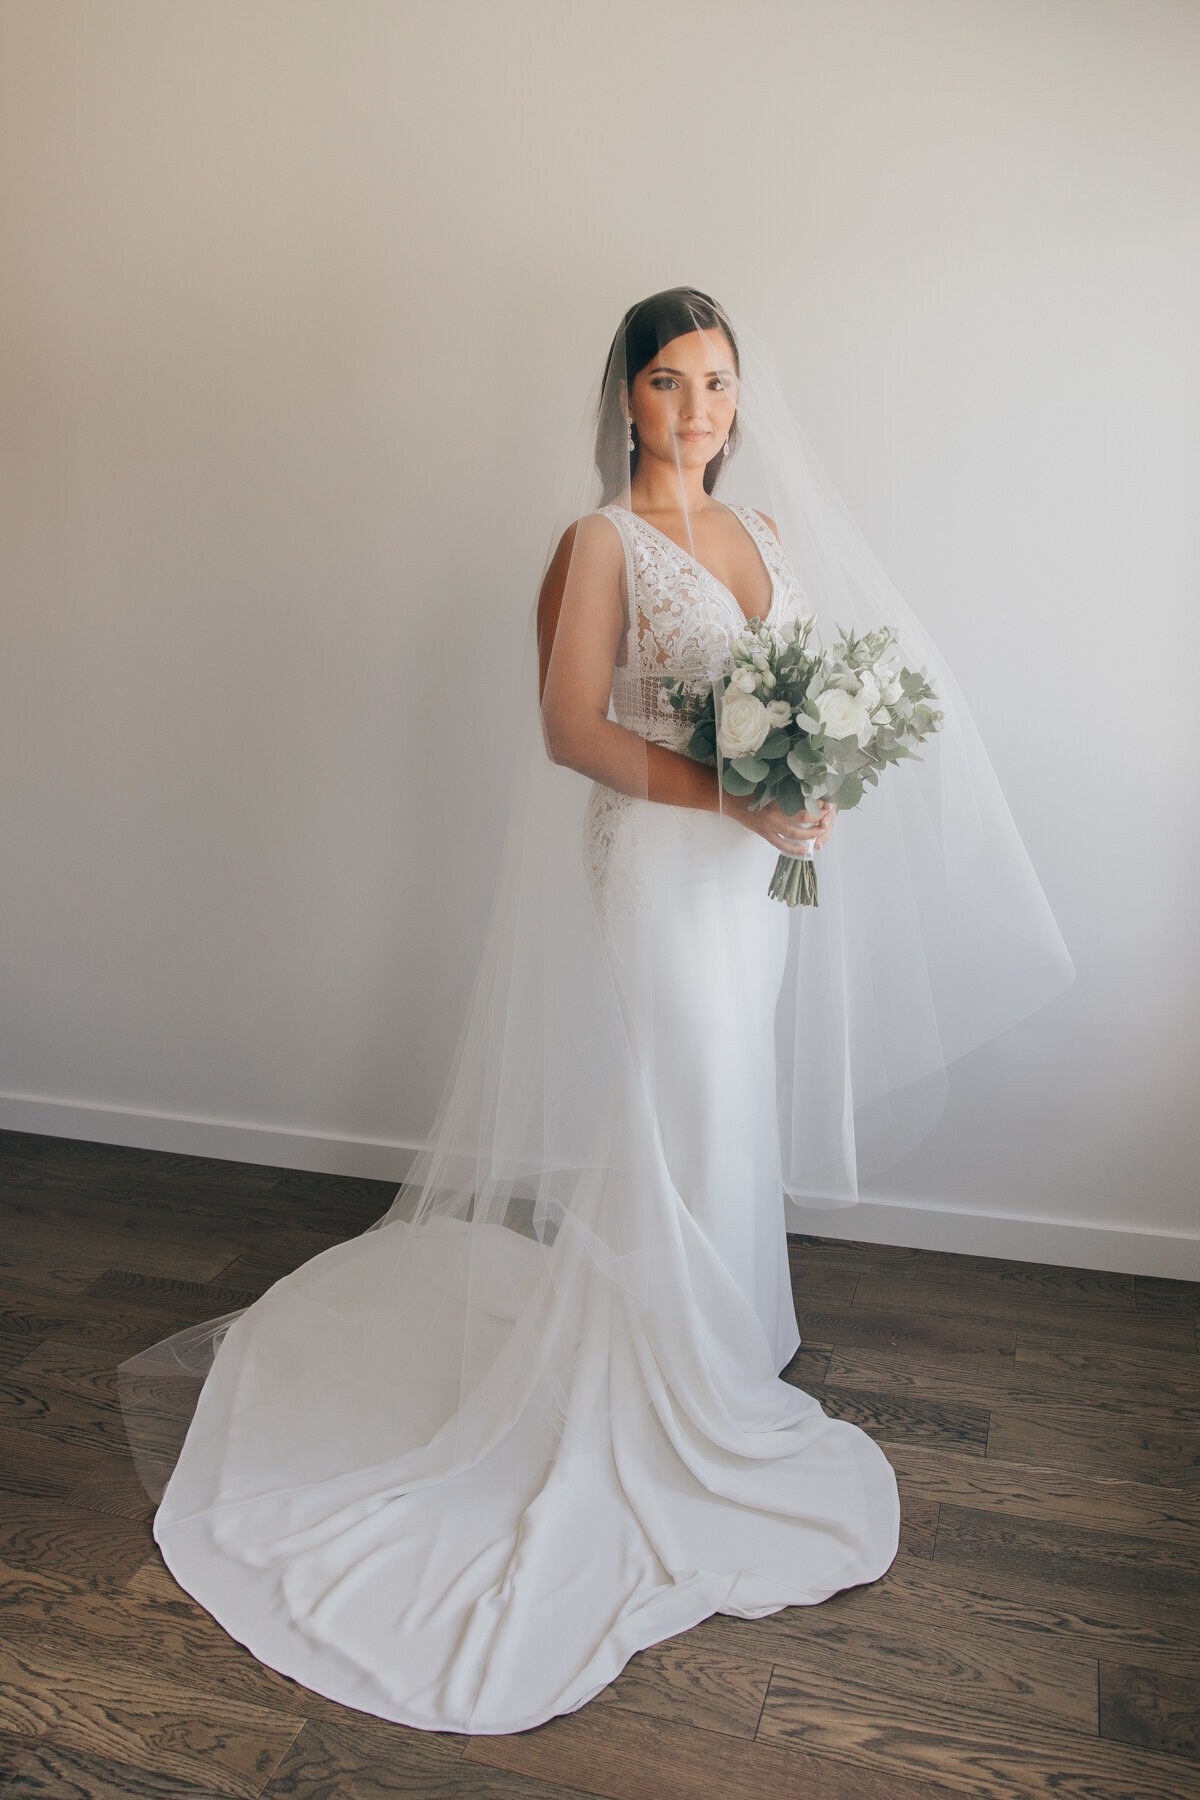 Elegant bride posing in her white wedding dress while holding her white wedding bouquet